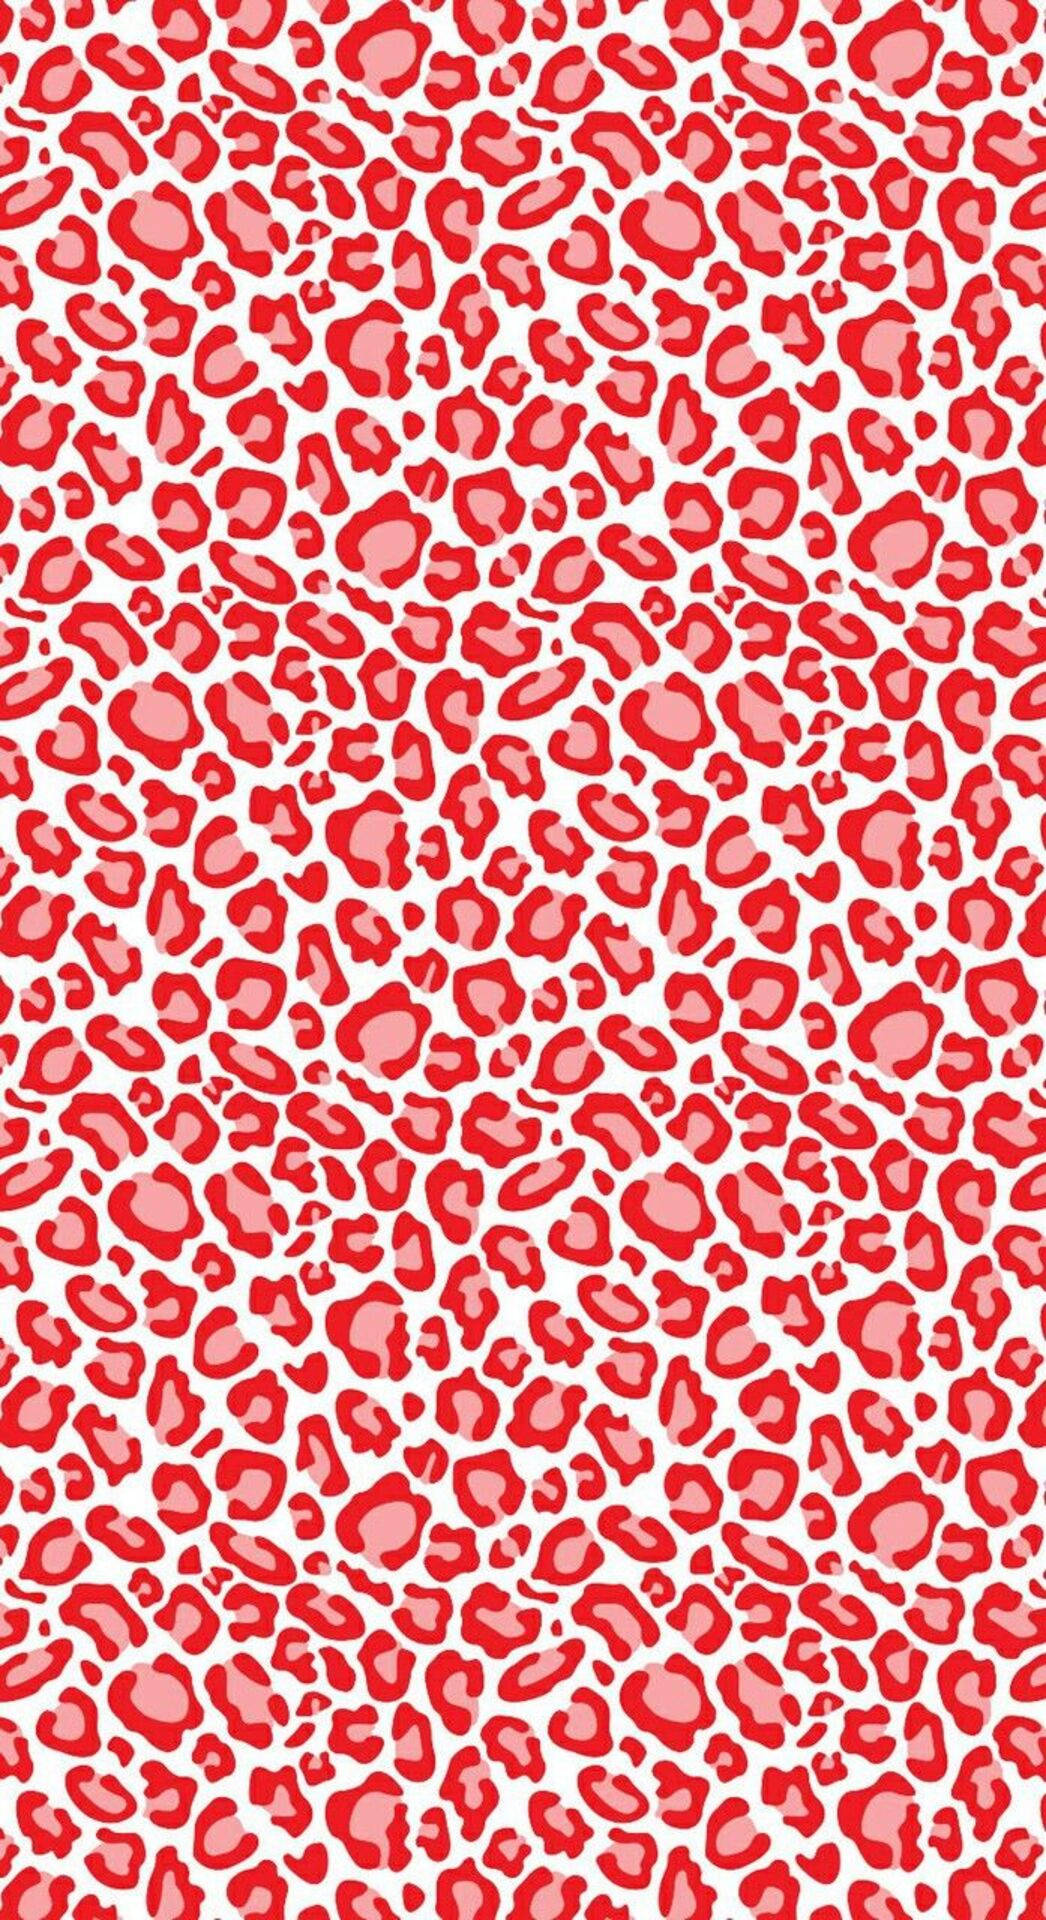 Download Red Leopard Print Wallpaper 